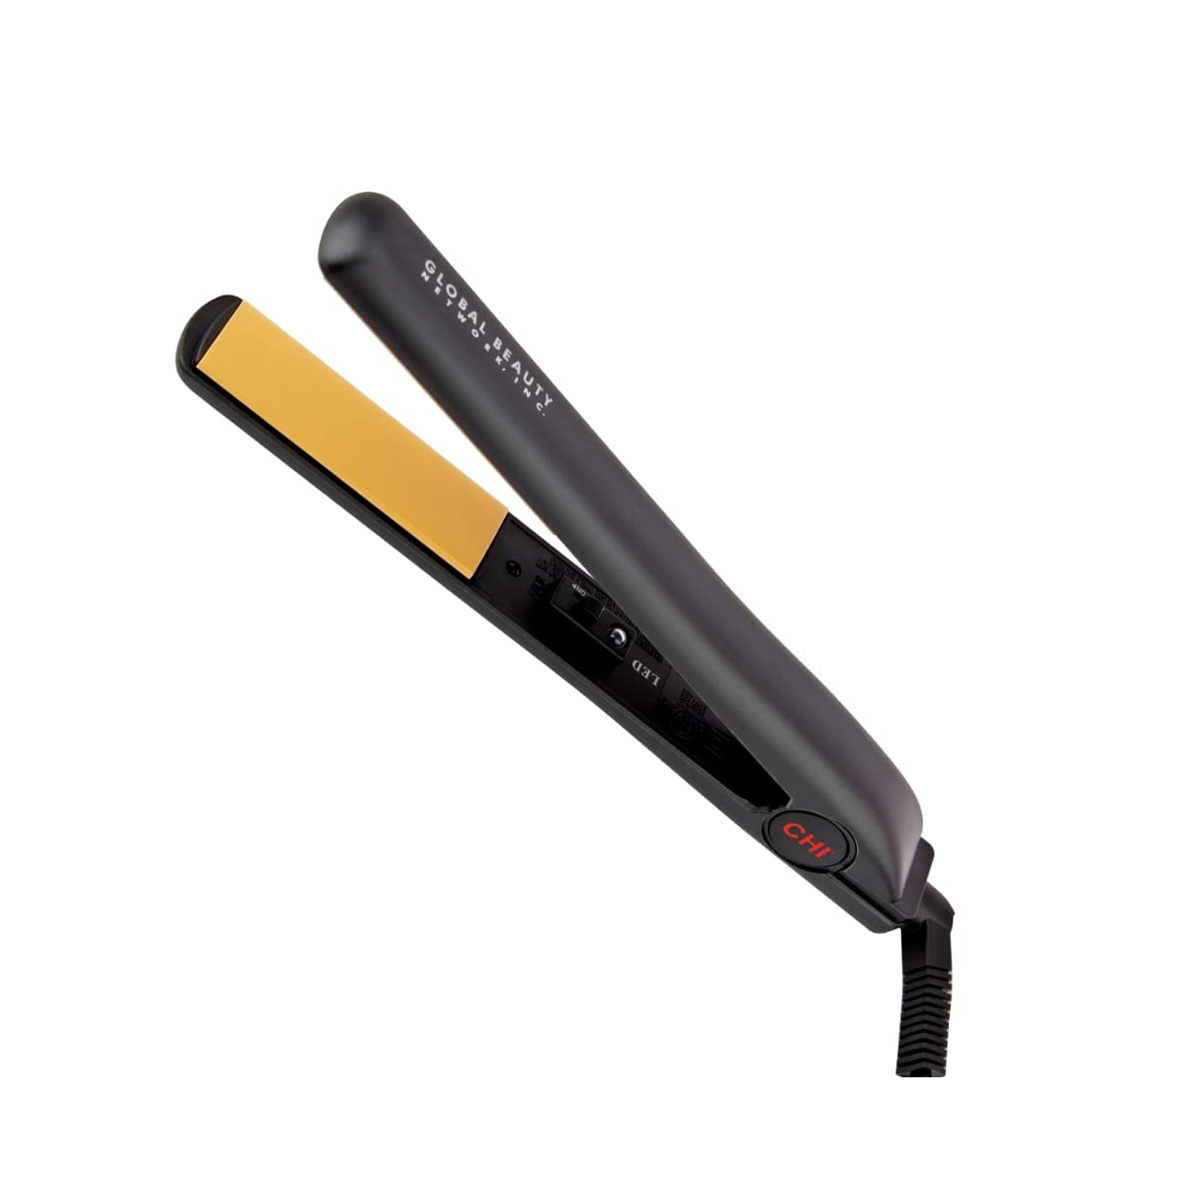 CHI Original Ceramic Hair Straightening Flat Iron 1″ Plates Black Professional Salon Model Hair Straightener Includes Heat Protection Pad